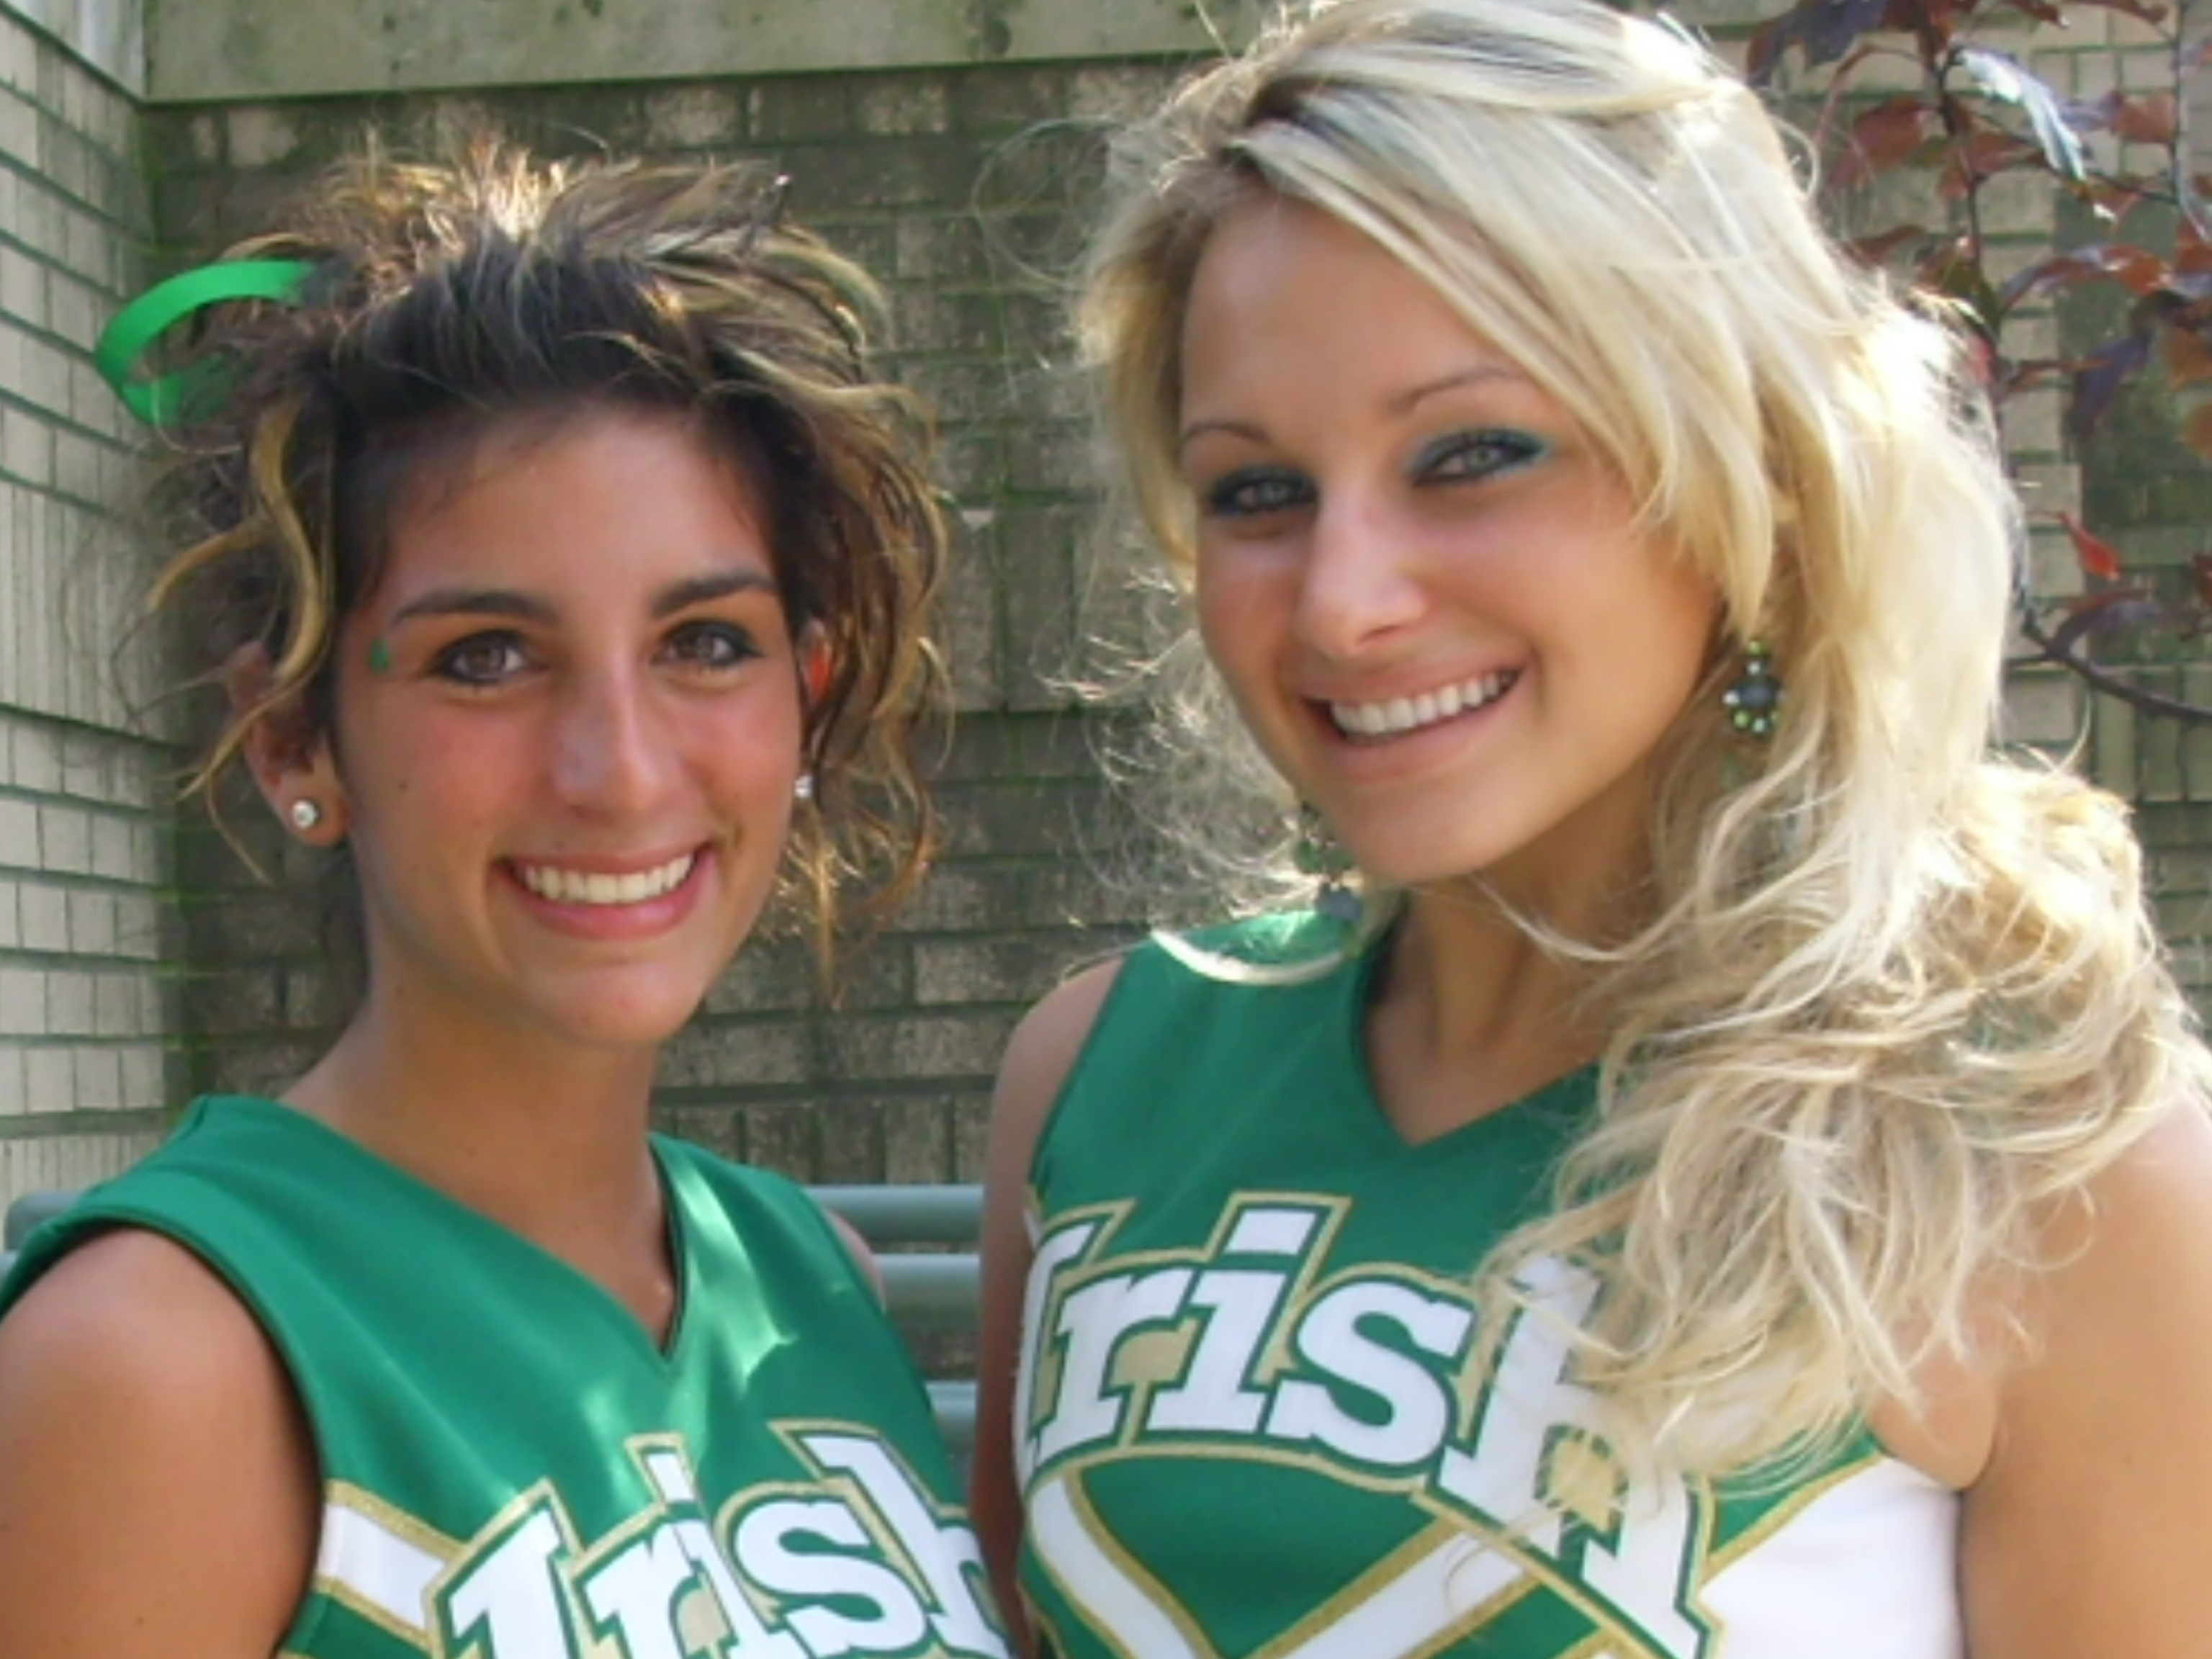 Ursuline Cheerleaders Cara Mia Gatti and Captain Katie Olenick
hit some pre-game poses!